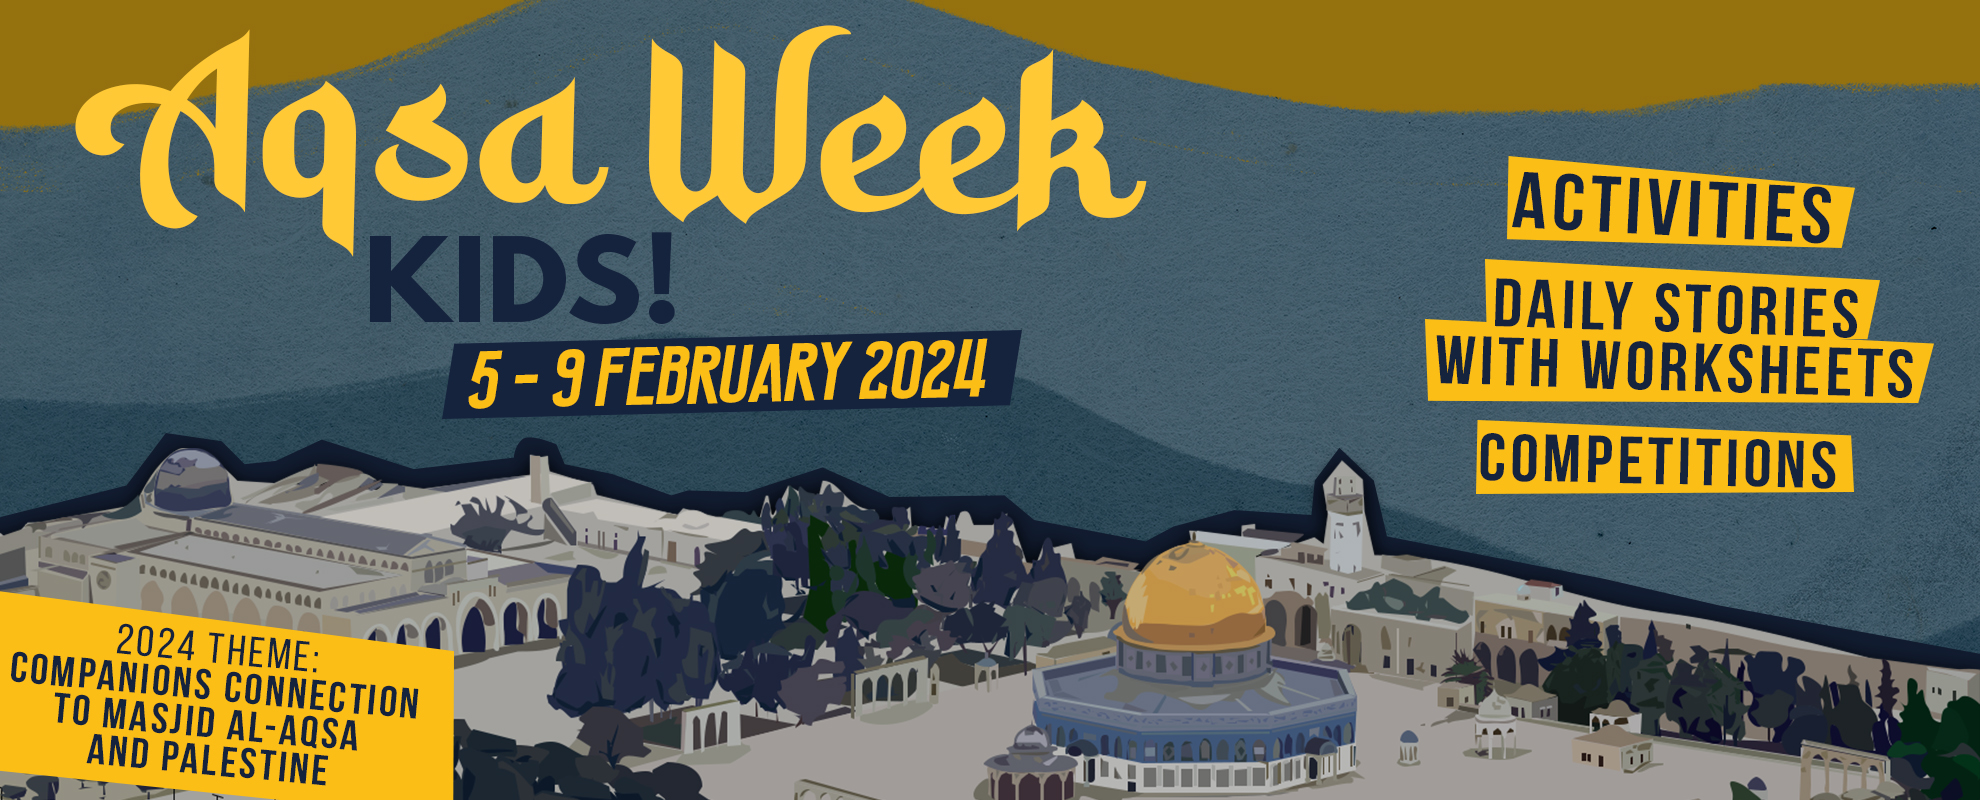 Aqsa Week Kids - 2024